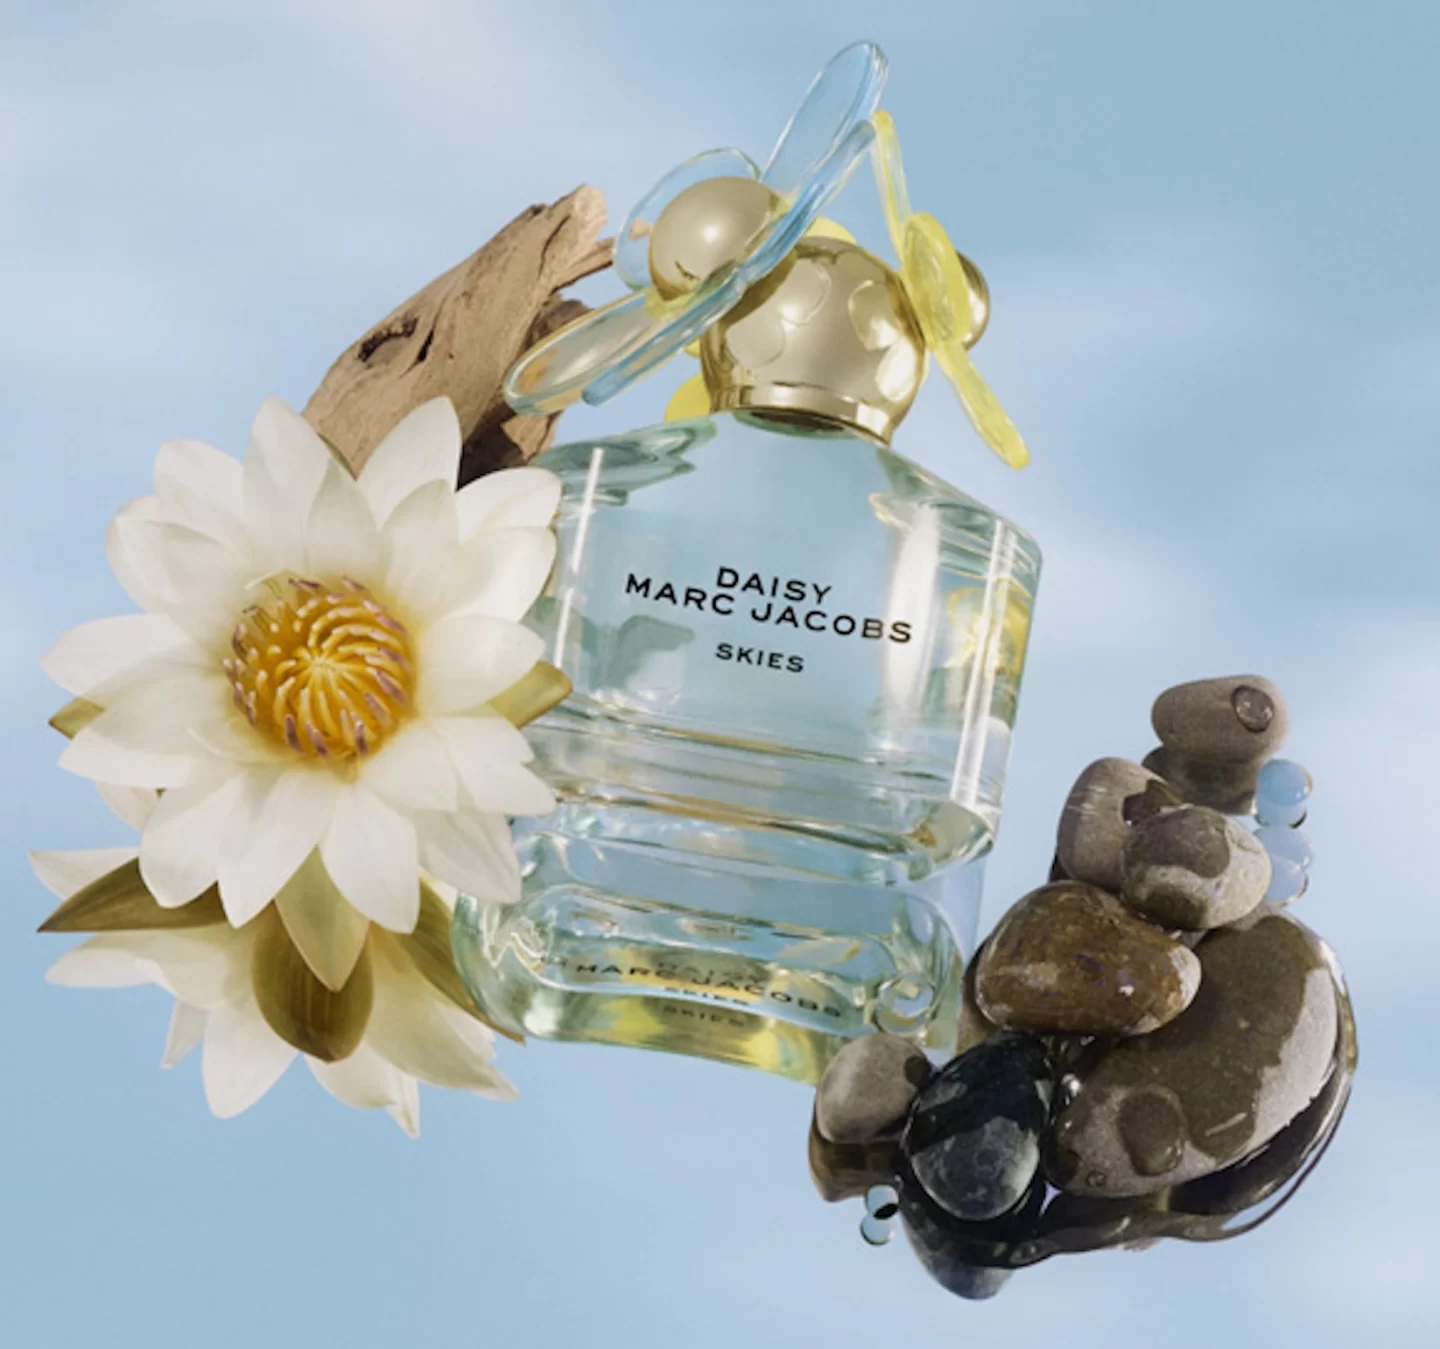 Marc Jacobs Daisy Skies
Best Lotus Perfumes